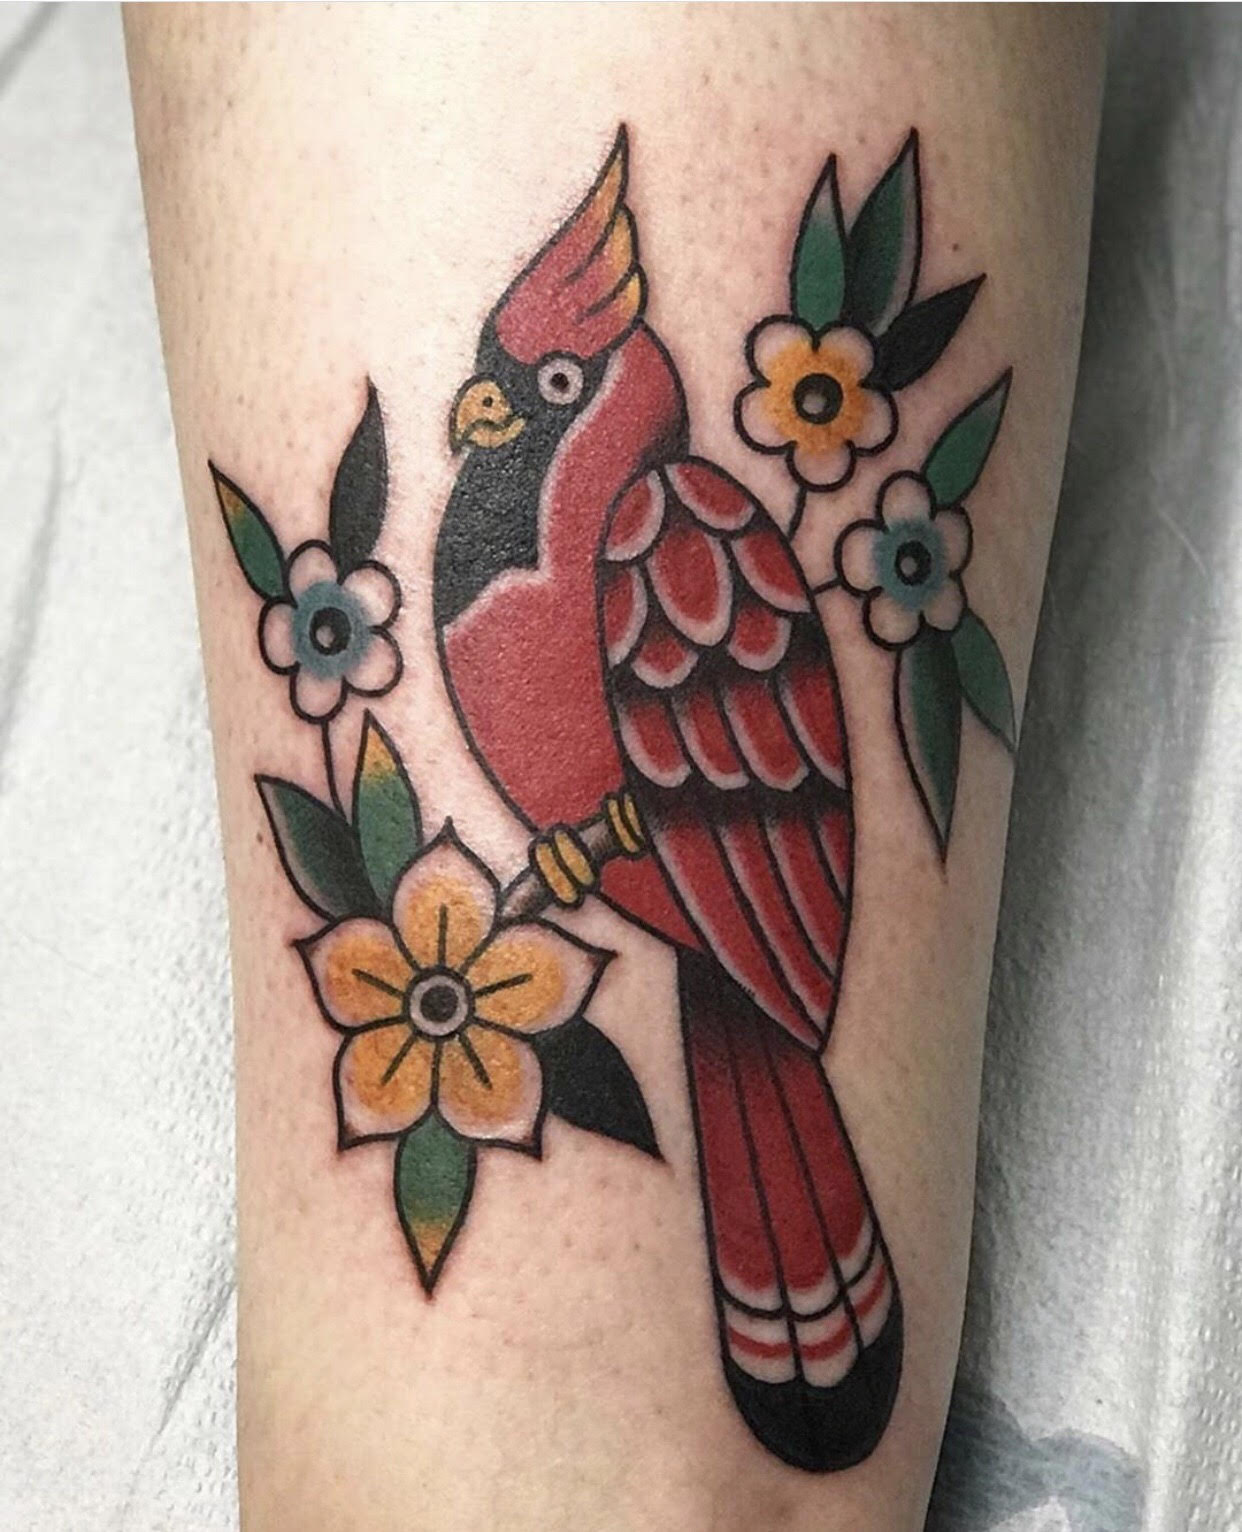 Cardinal tattoo by Tasha Tonks